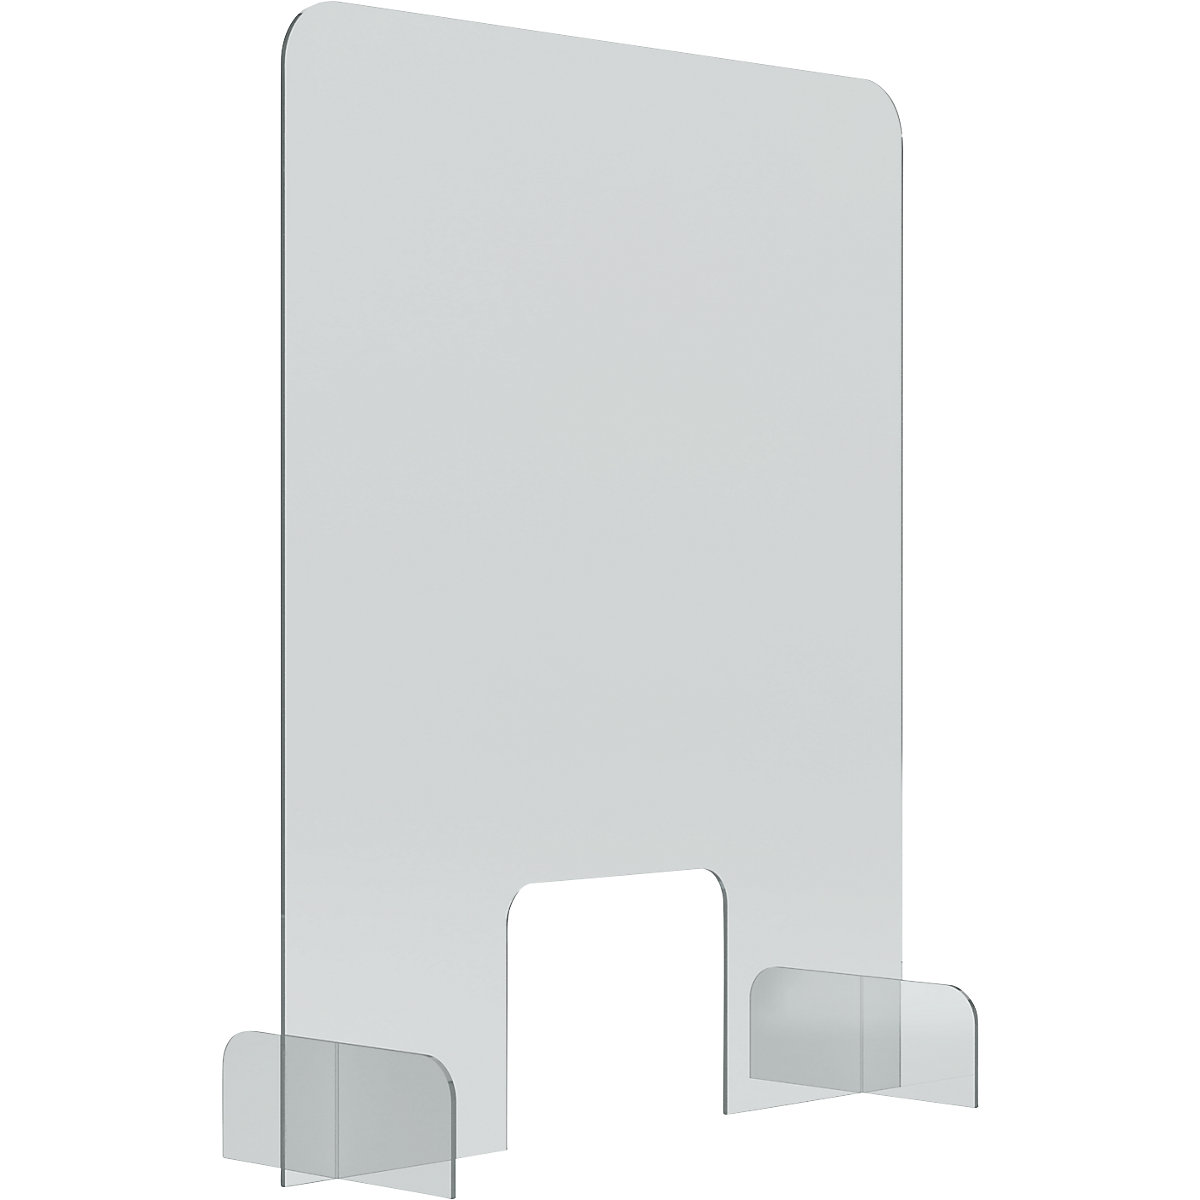 Balie- en tafelstandaard – magnetoplan, acrylglas, transparant, 5 mm dik, h x b x d = 845 x 670 x 240 mm, vanaf 5 stuks-8